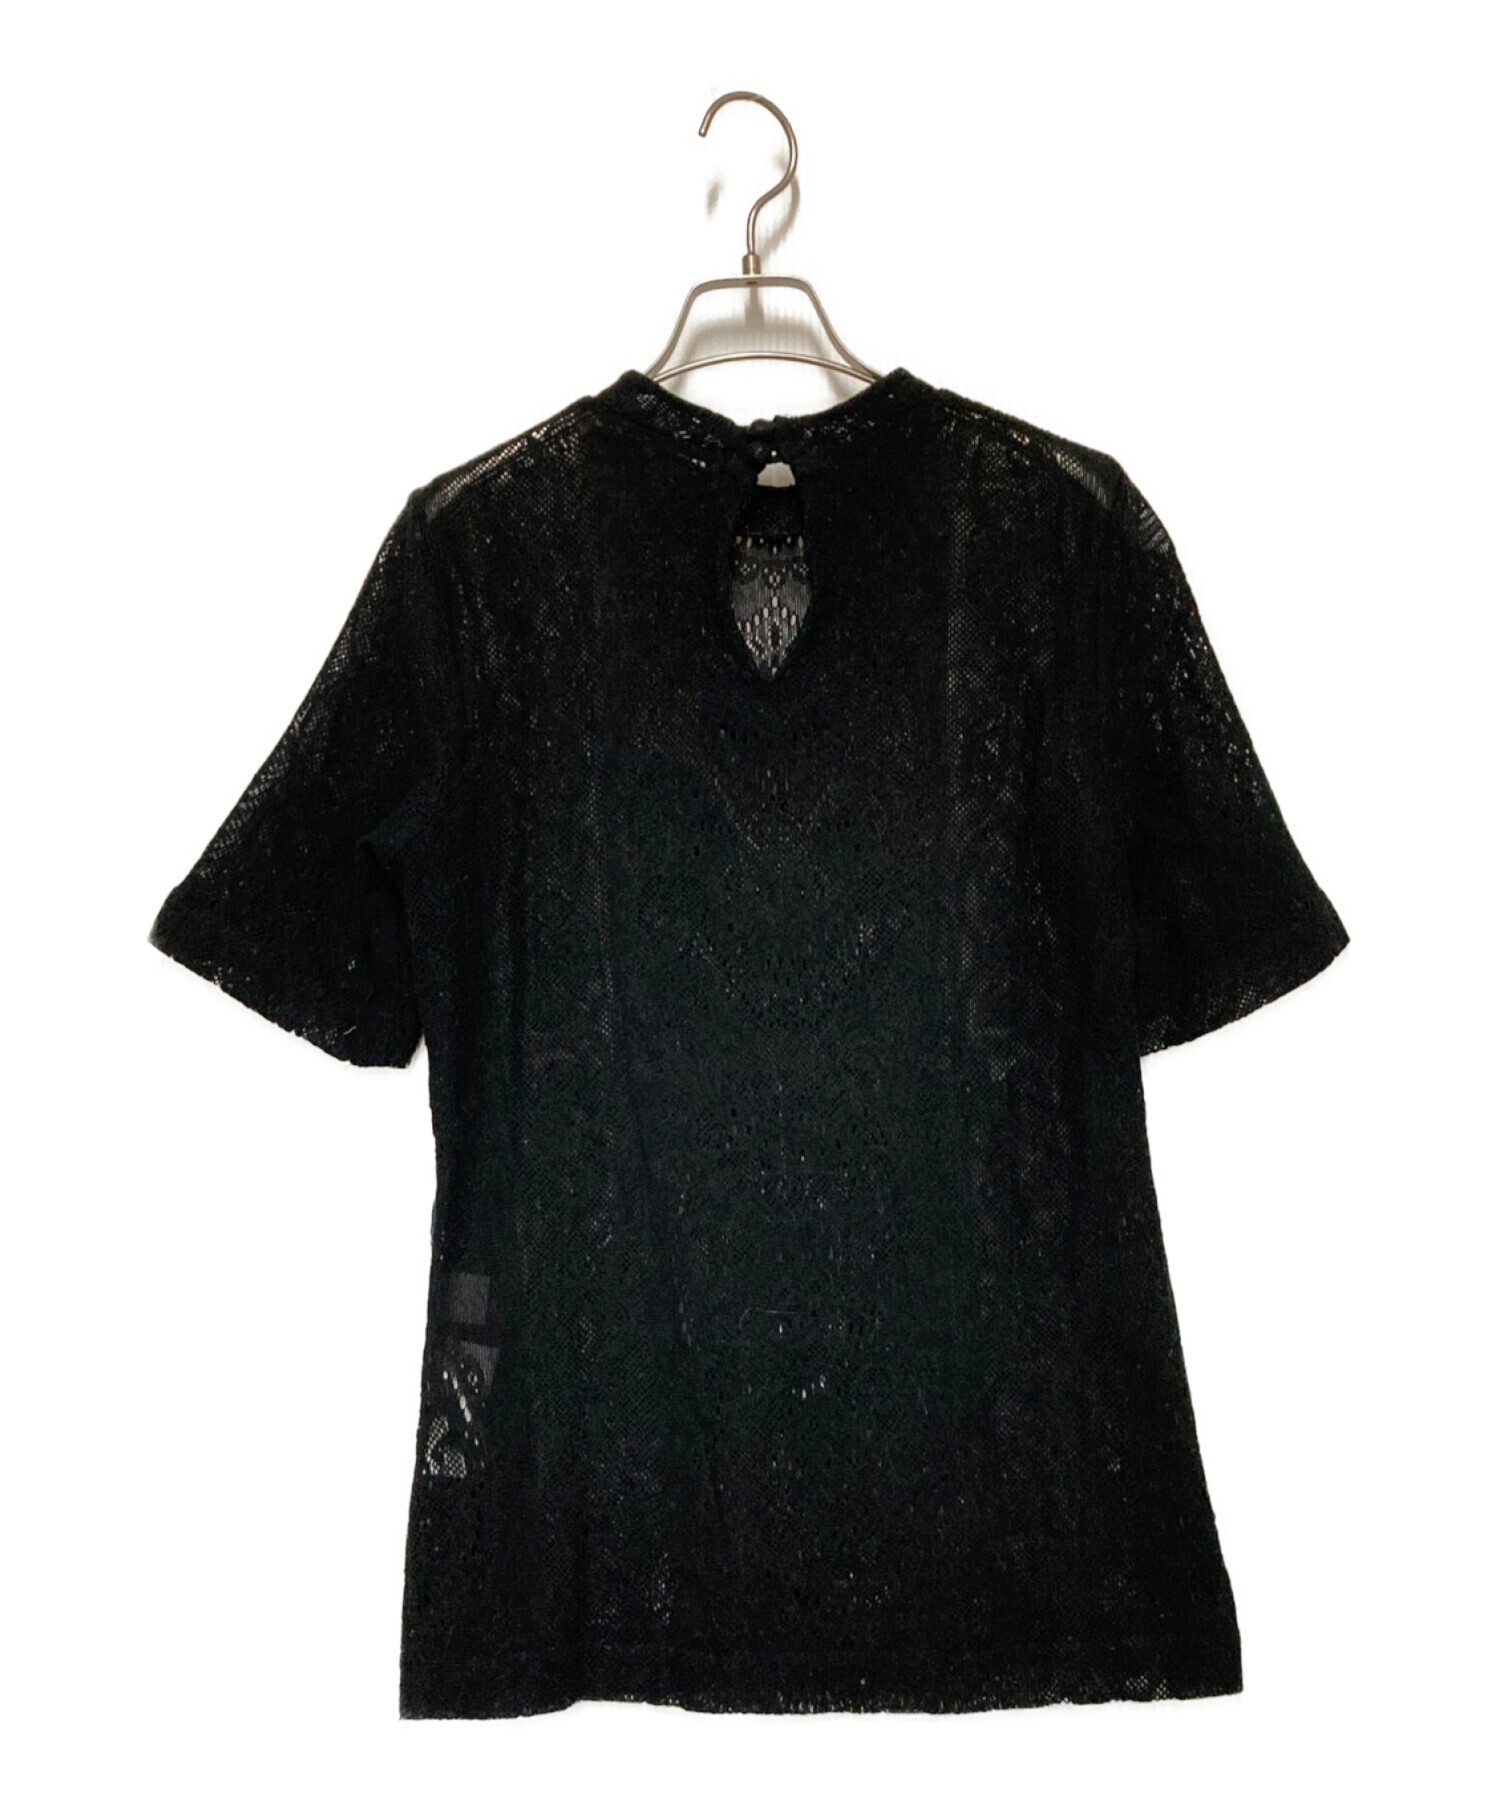 Mame Kurogouchi (マメクロゴウチ) Curtain Lace Jacquard Jersey Top　ジャガードブラウス ブラック  サイズ:L